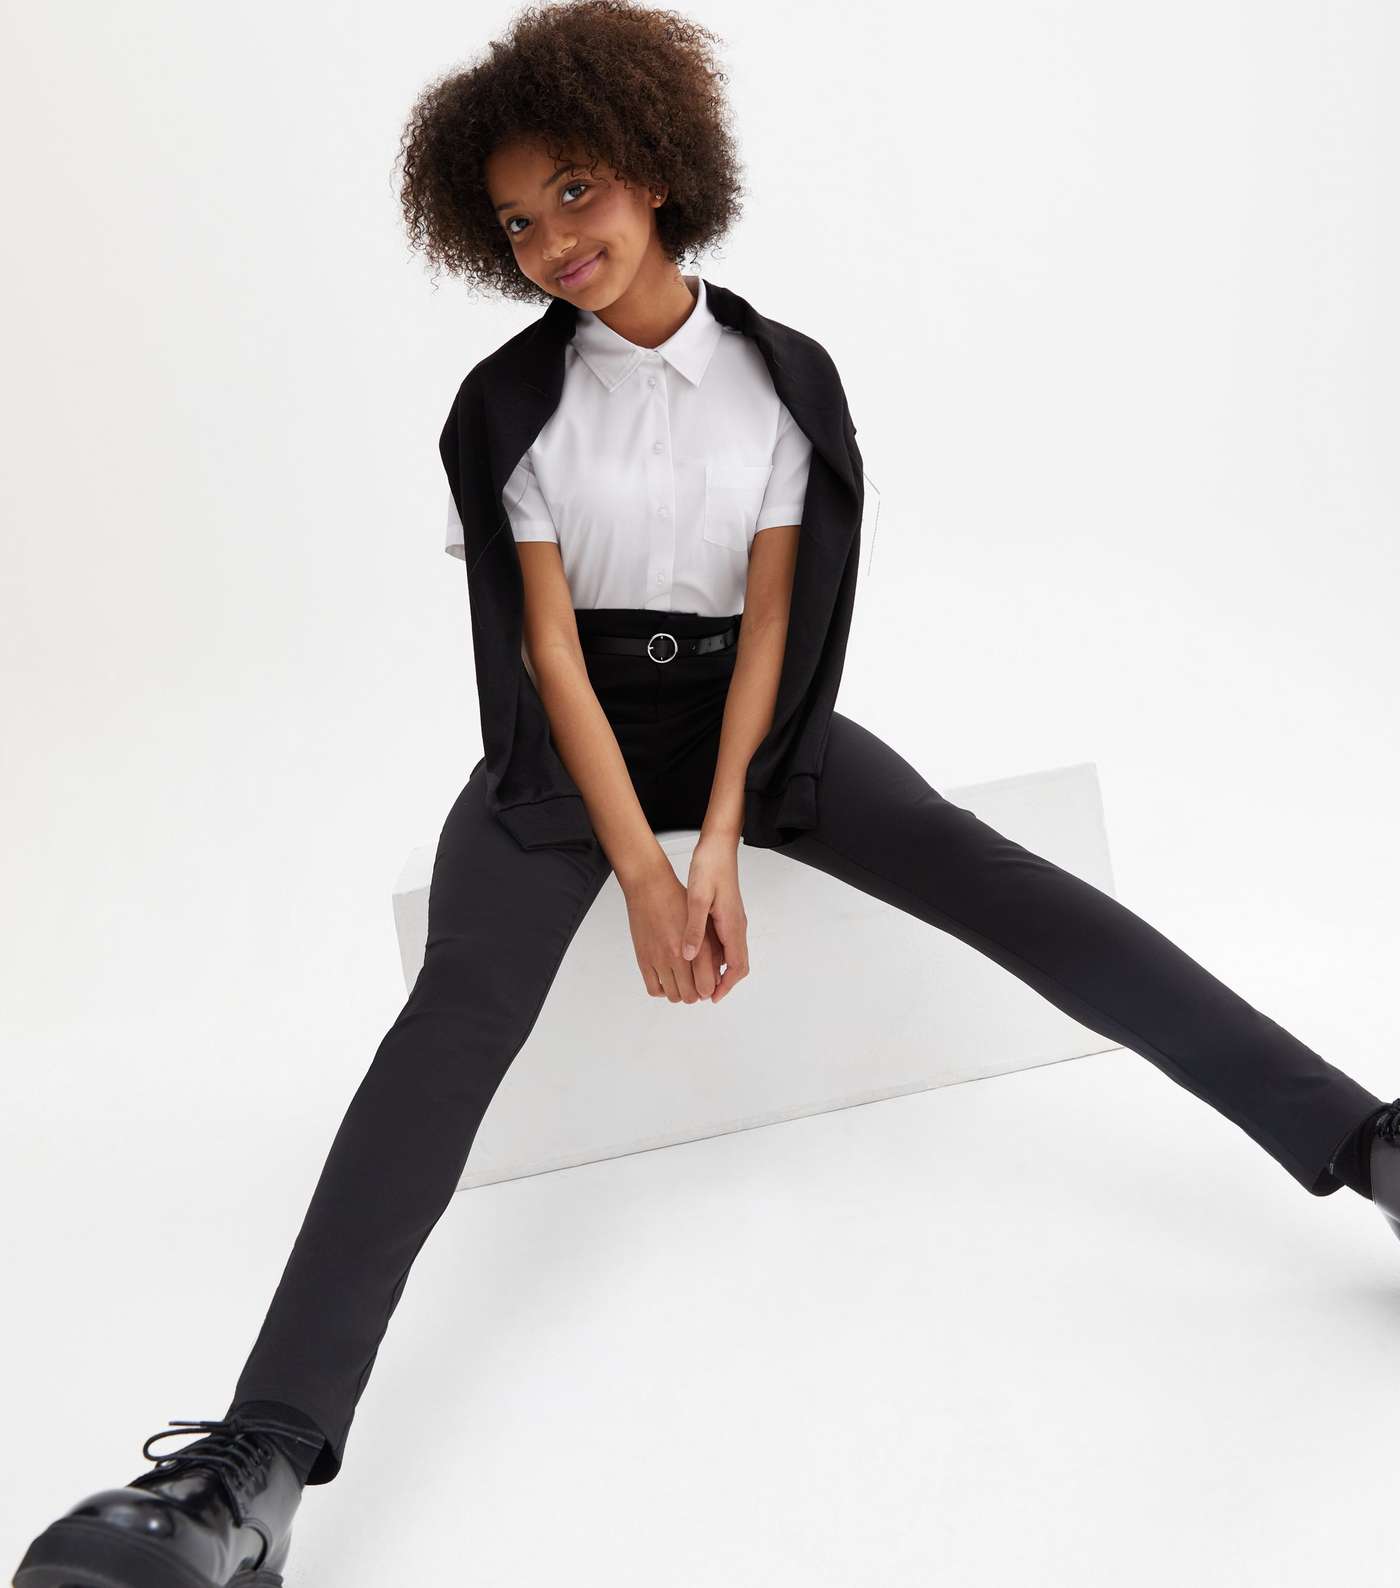 Girls Black School Trousers  Bootcut & Skinny School Trousers